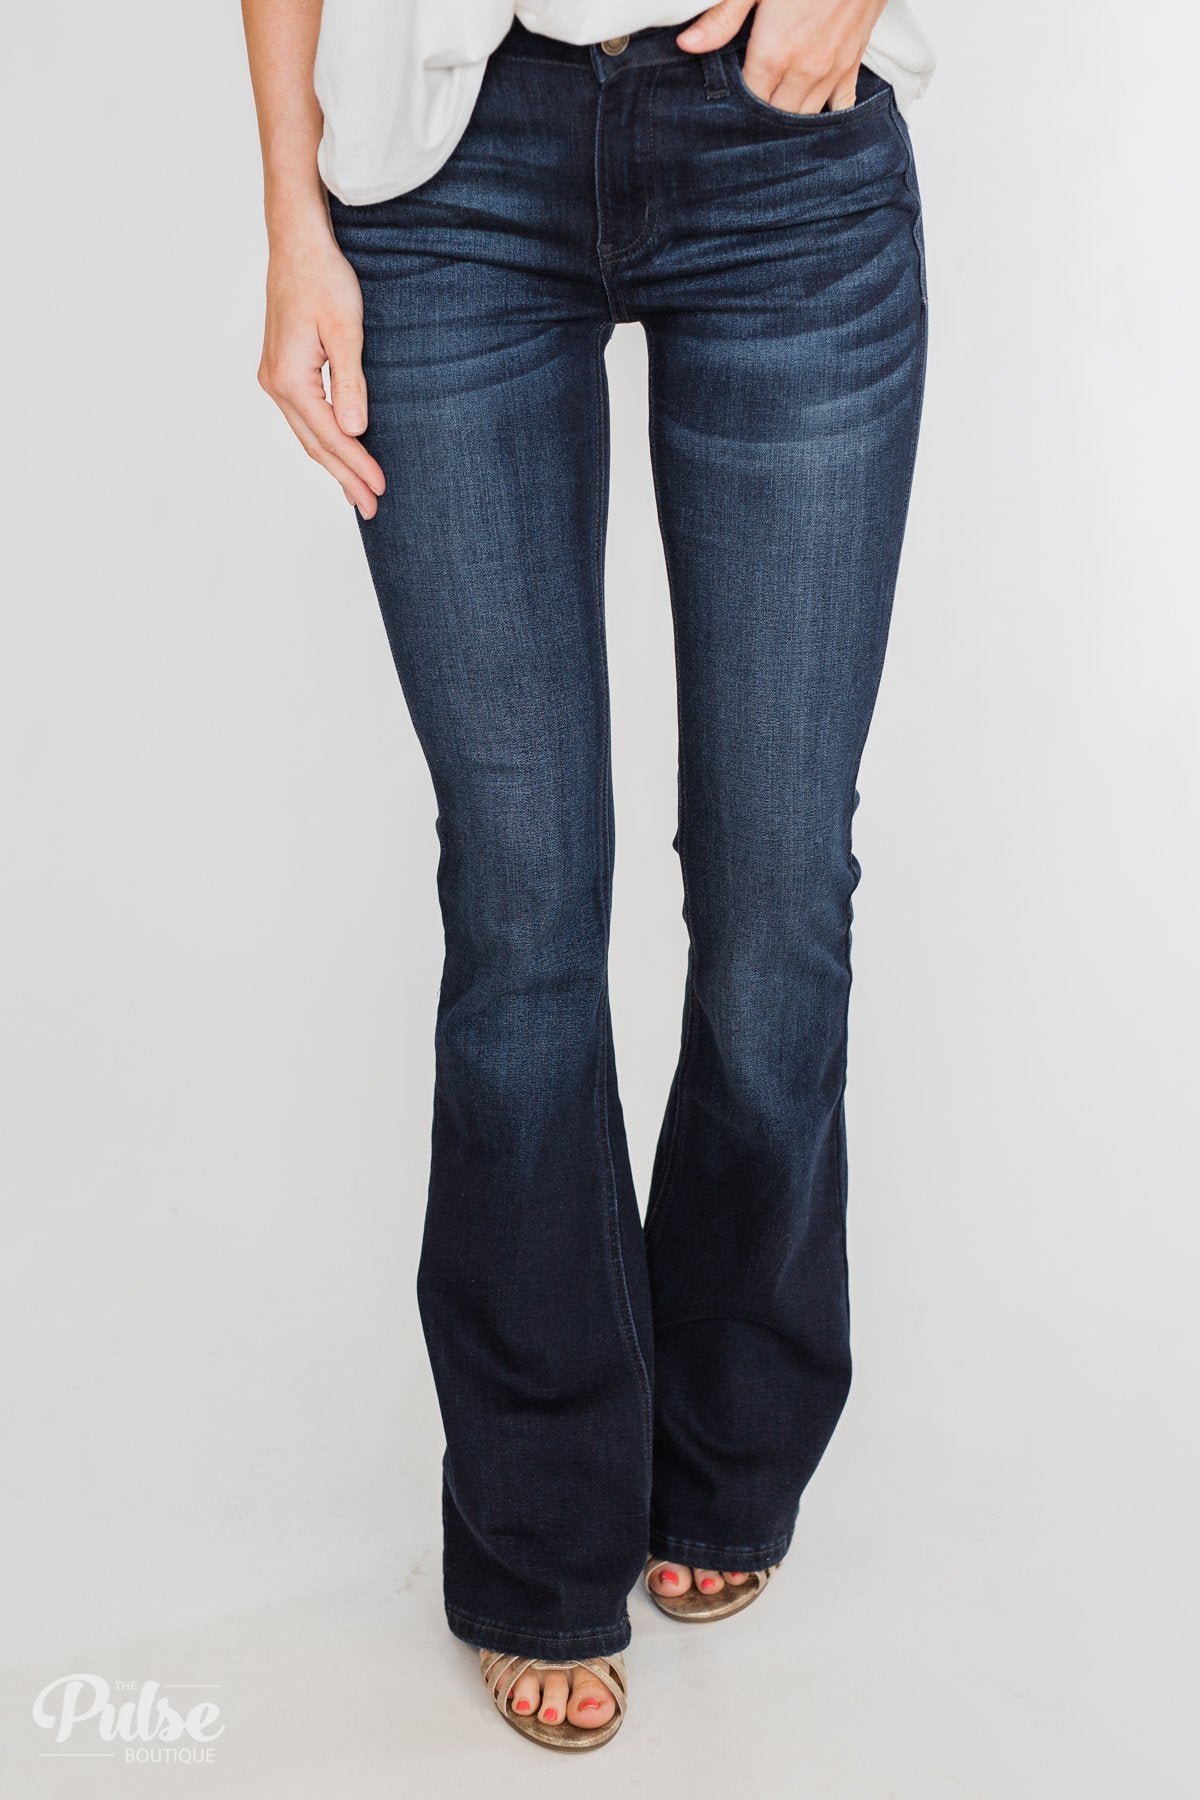 white stag women's elastic waist jeans